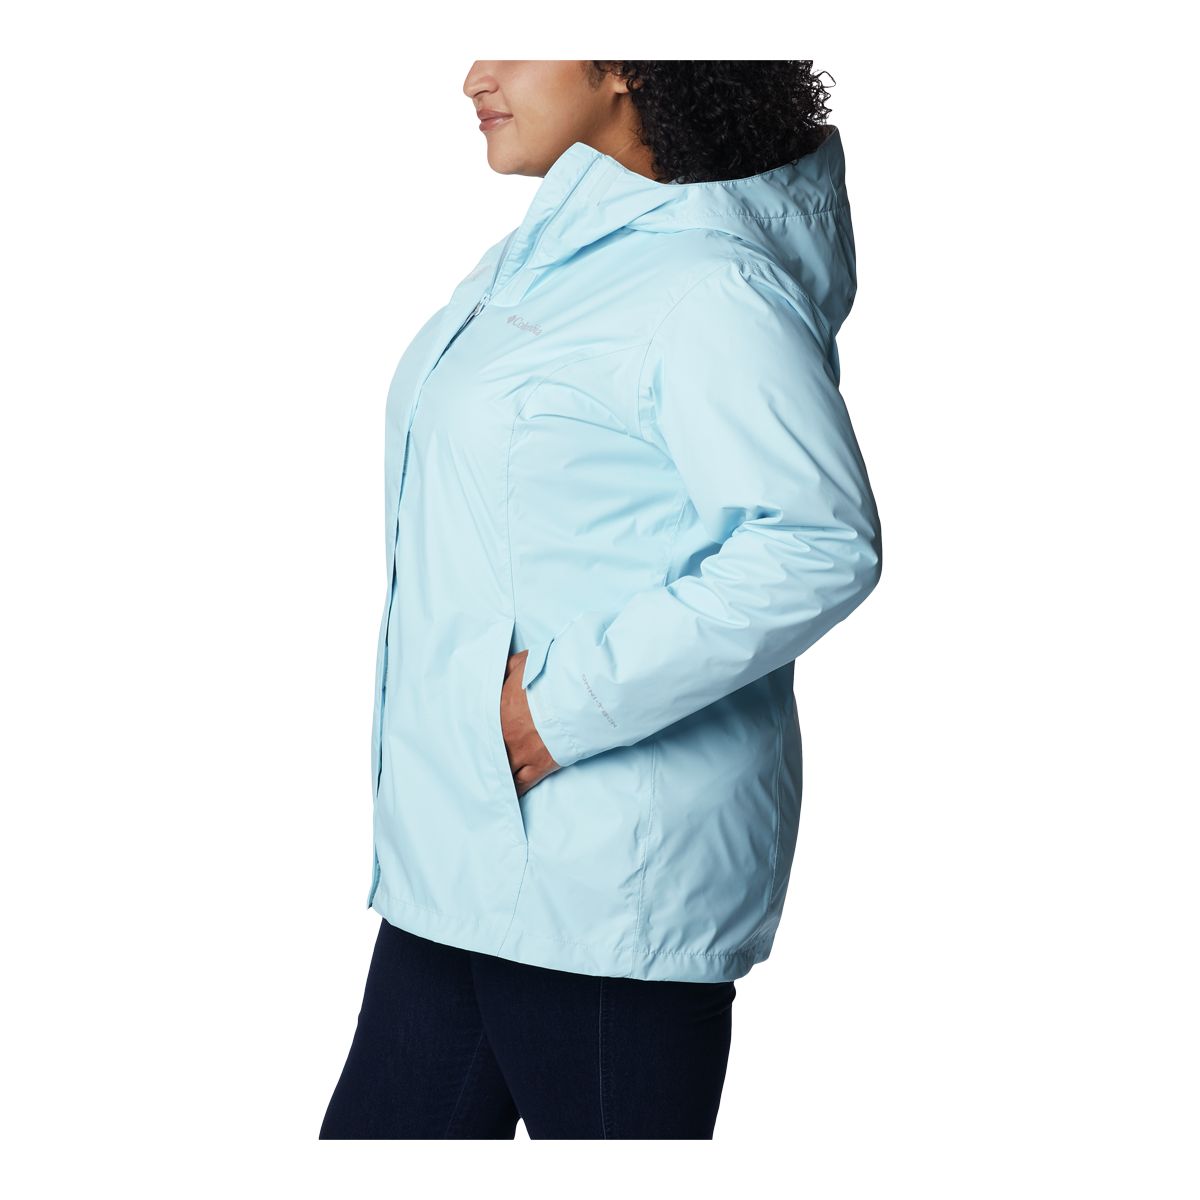 Columbia Venture On Interchange Jacket W - Waterproof - Jackets - Women's  Clothing - Lifestyle en